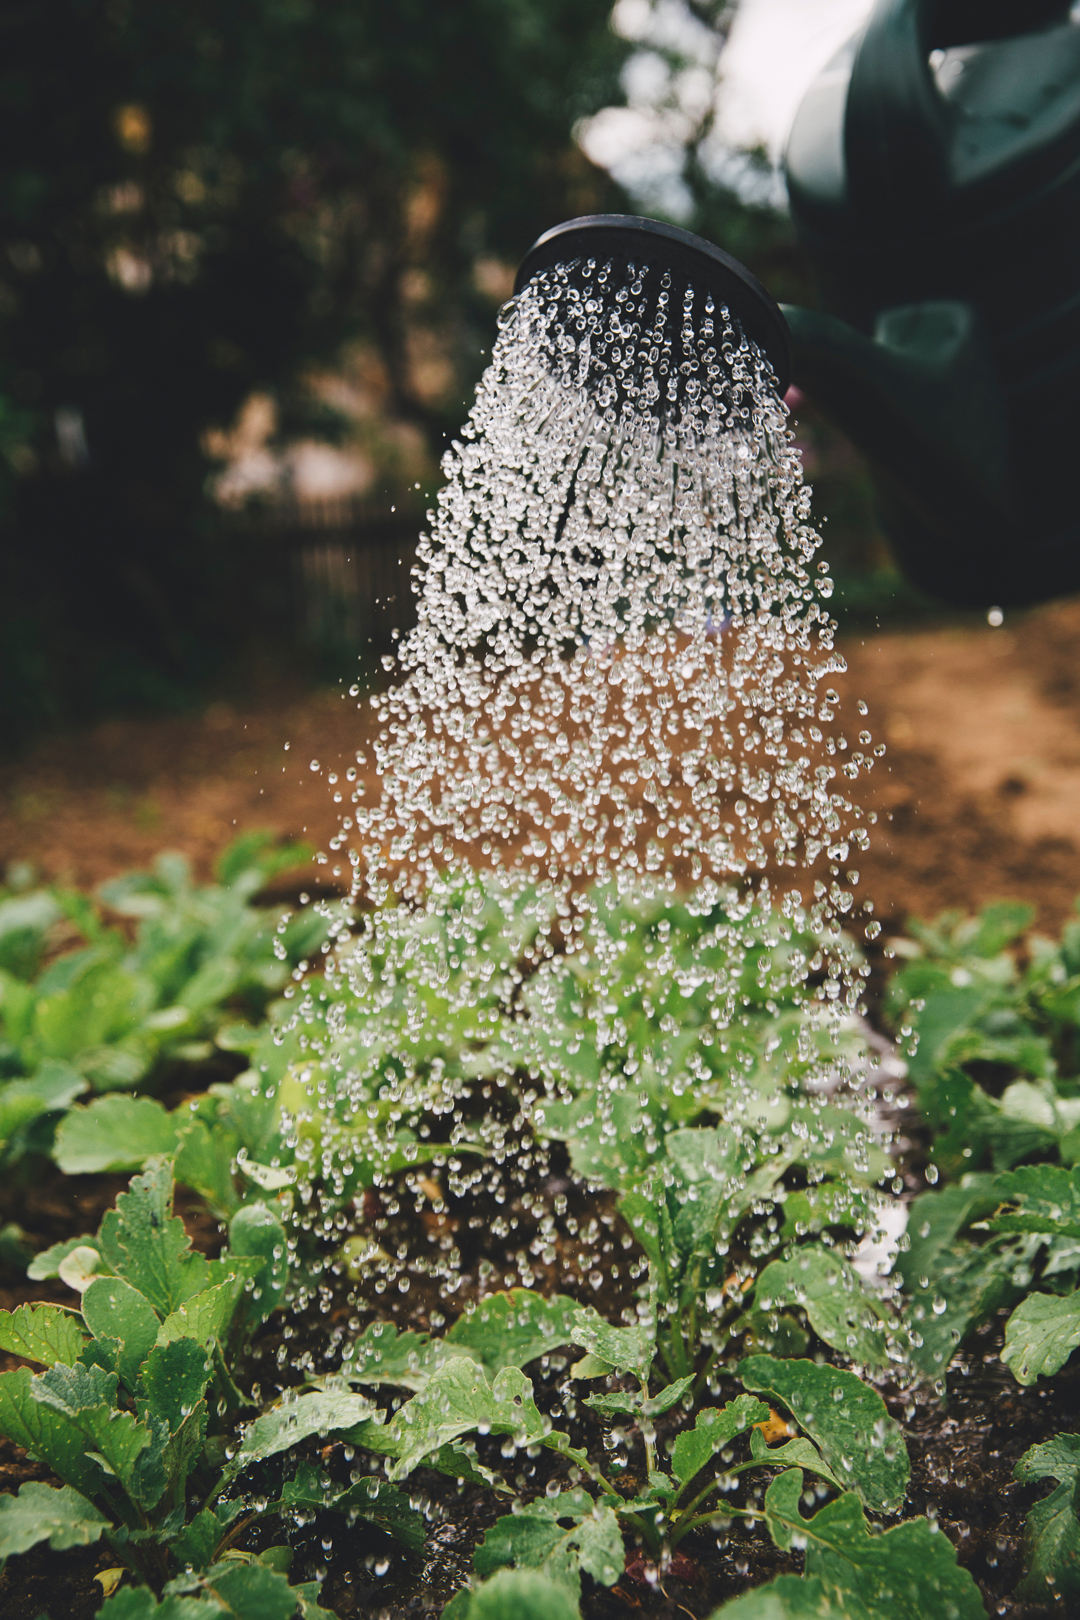 Image of a watering can watering plants in a garden. Photo source: Markus Spiske, Unsplash